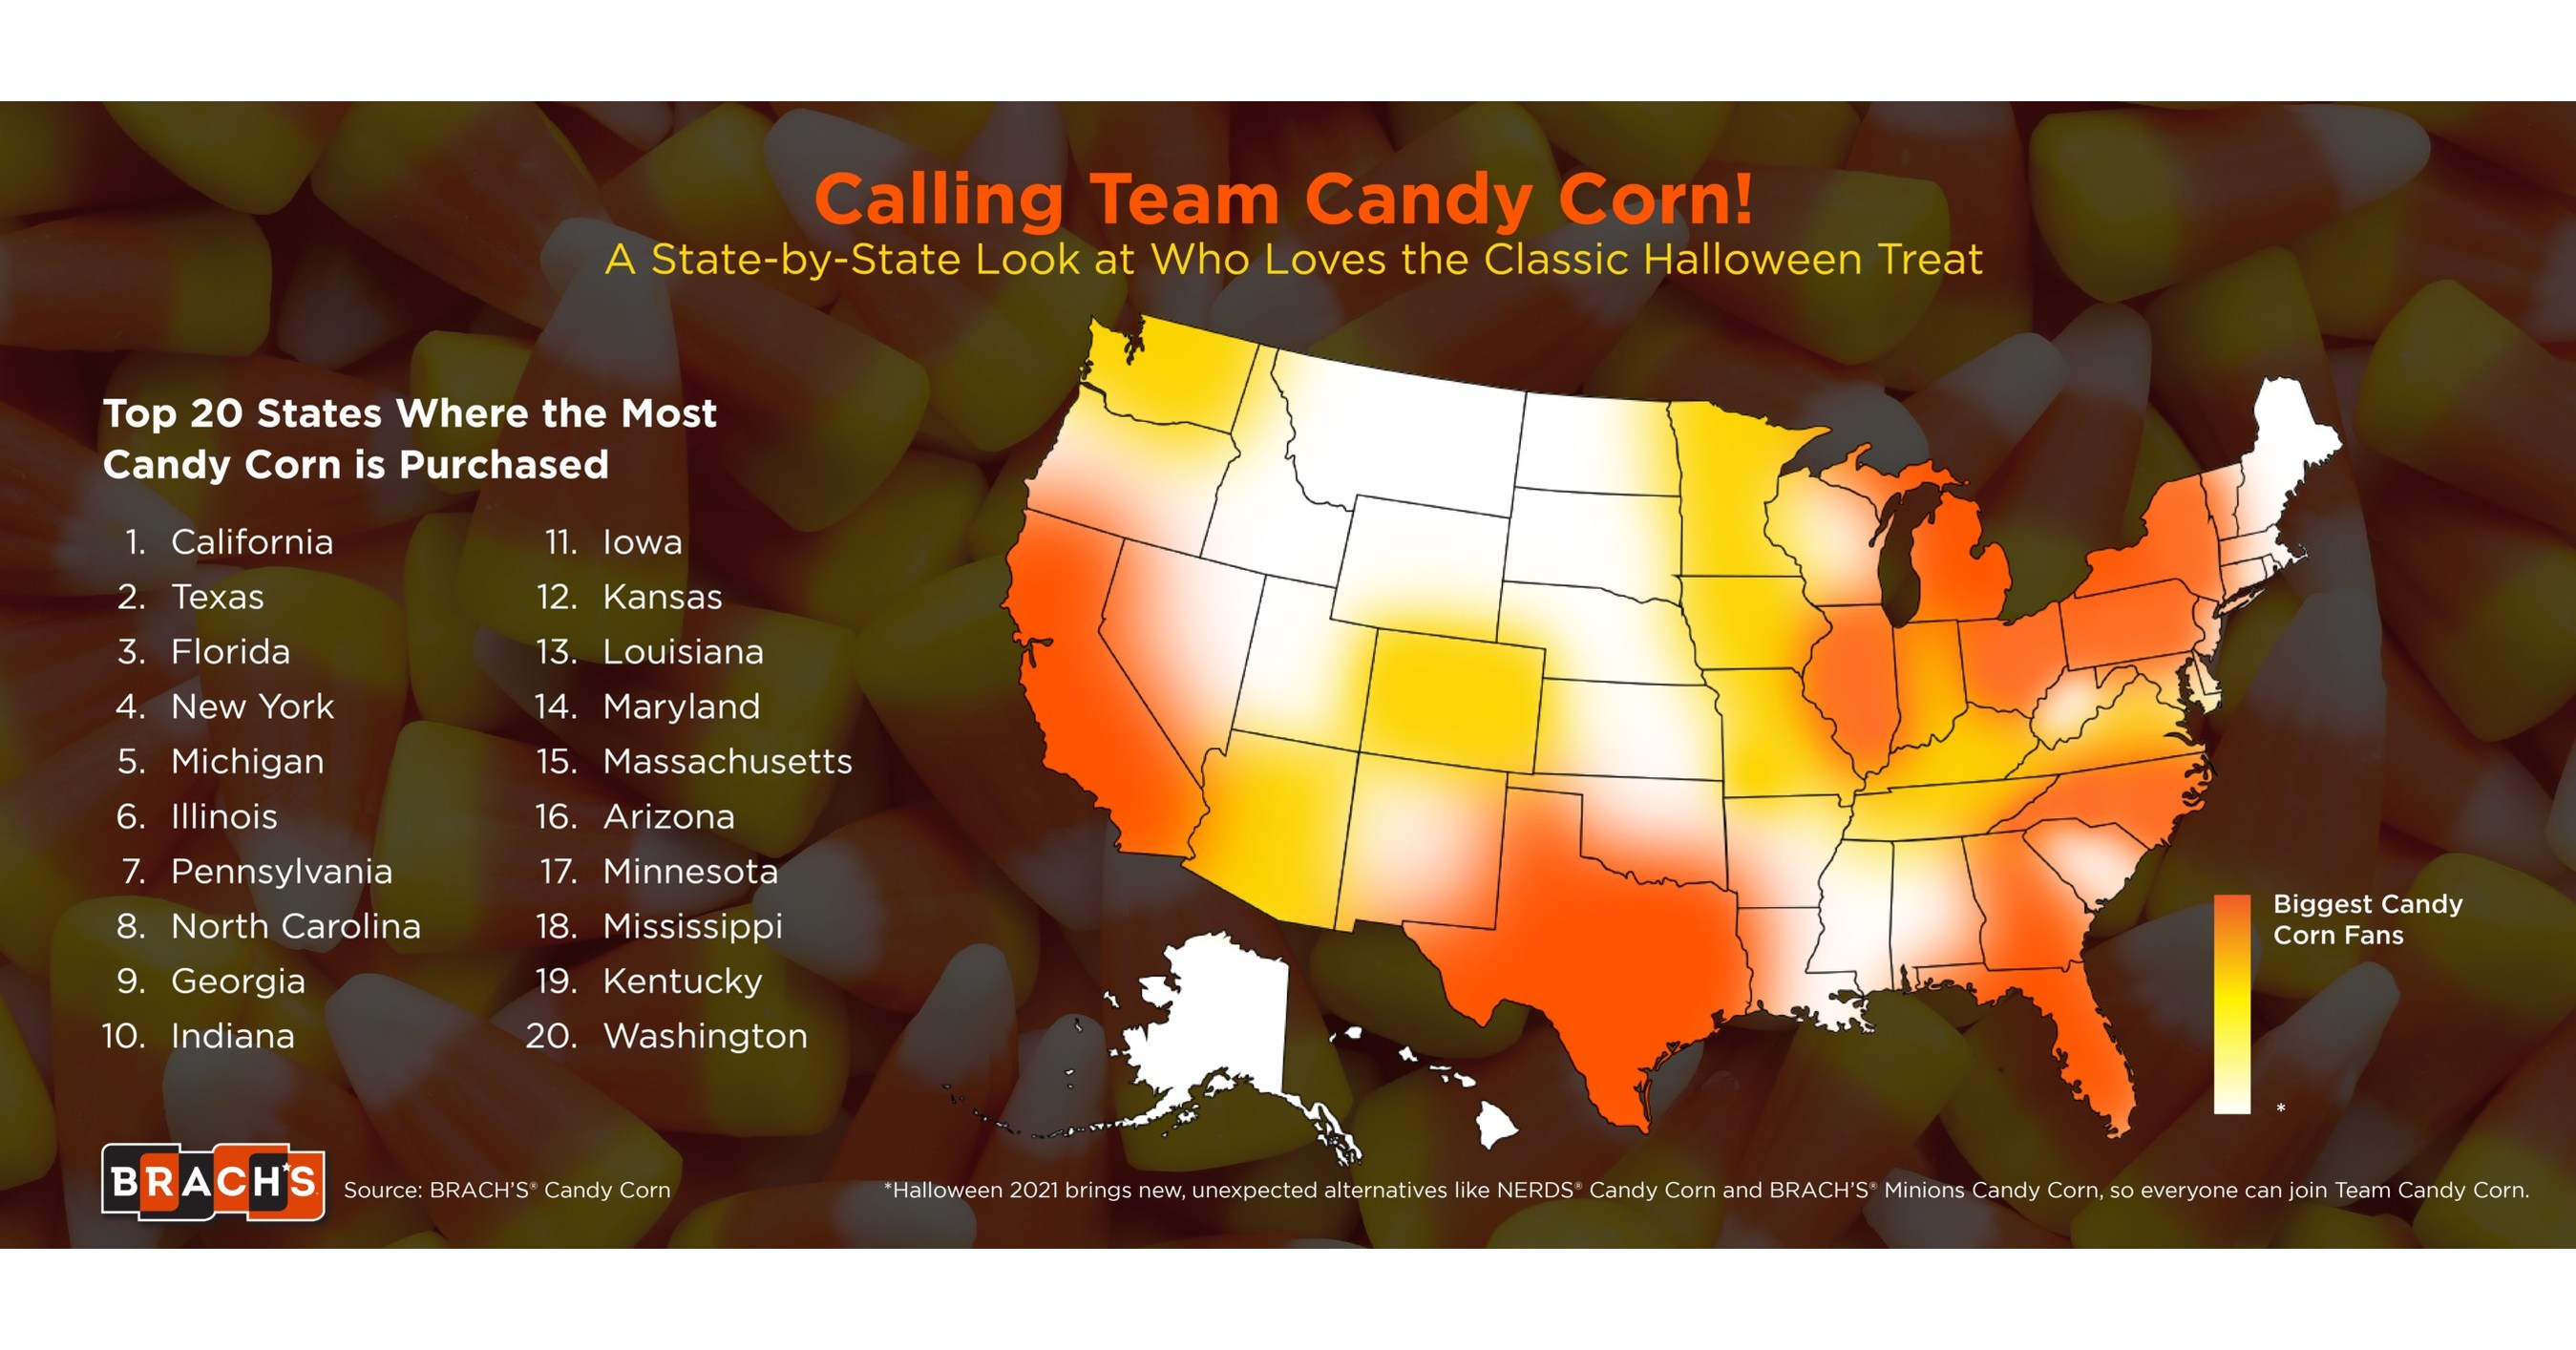 Brach's Football Candy Corn, Halloween Candy